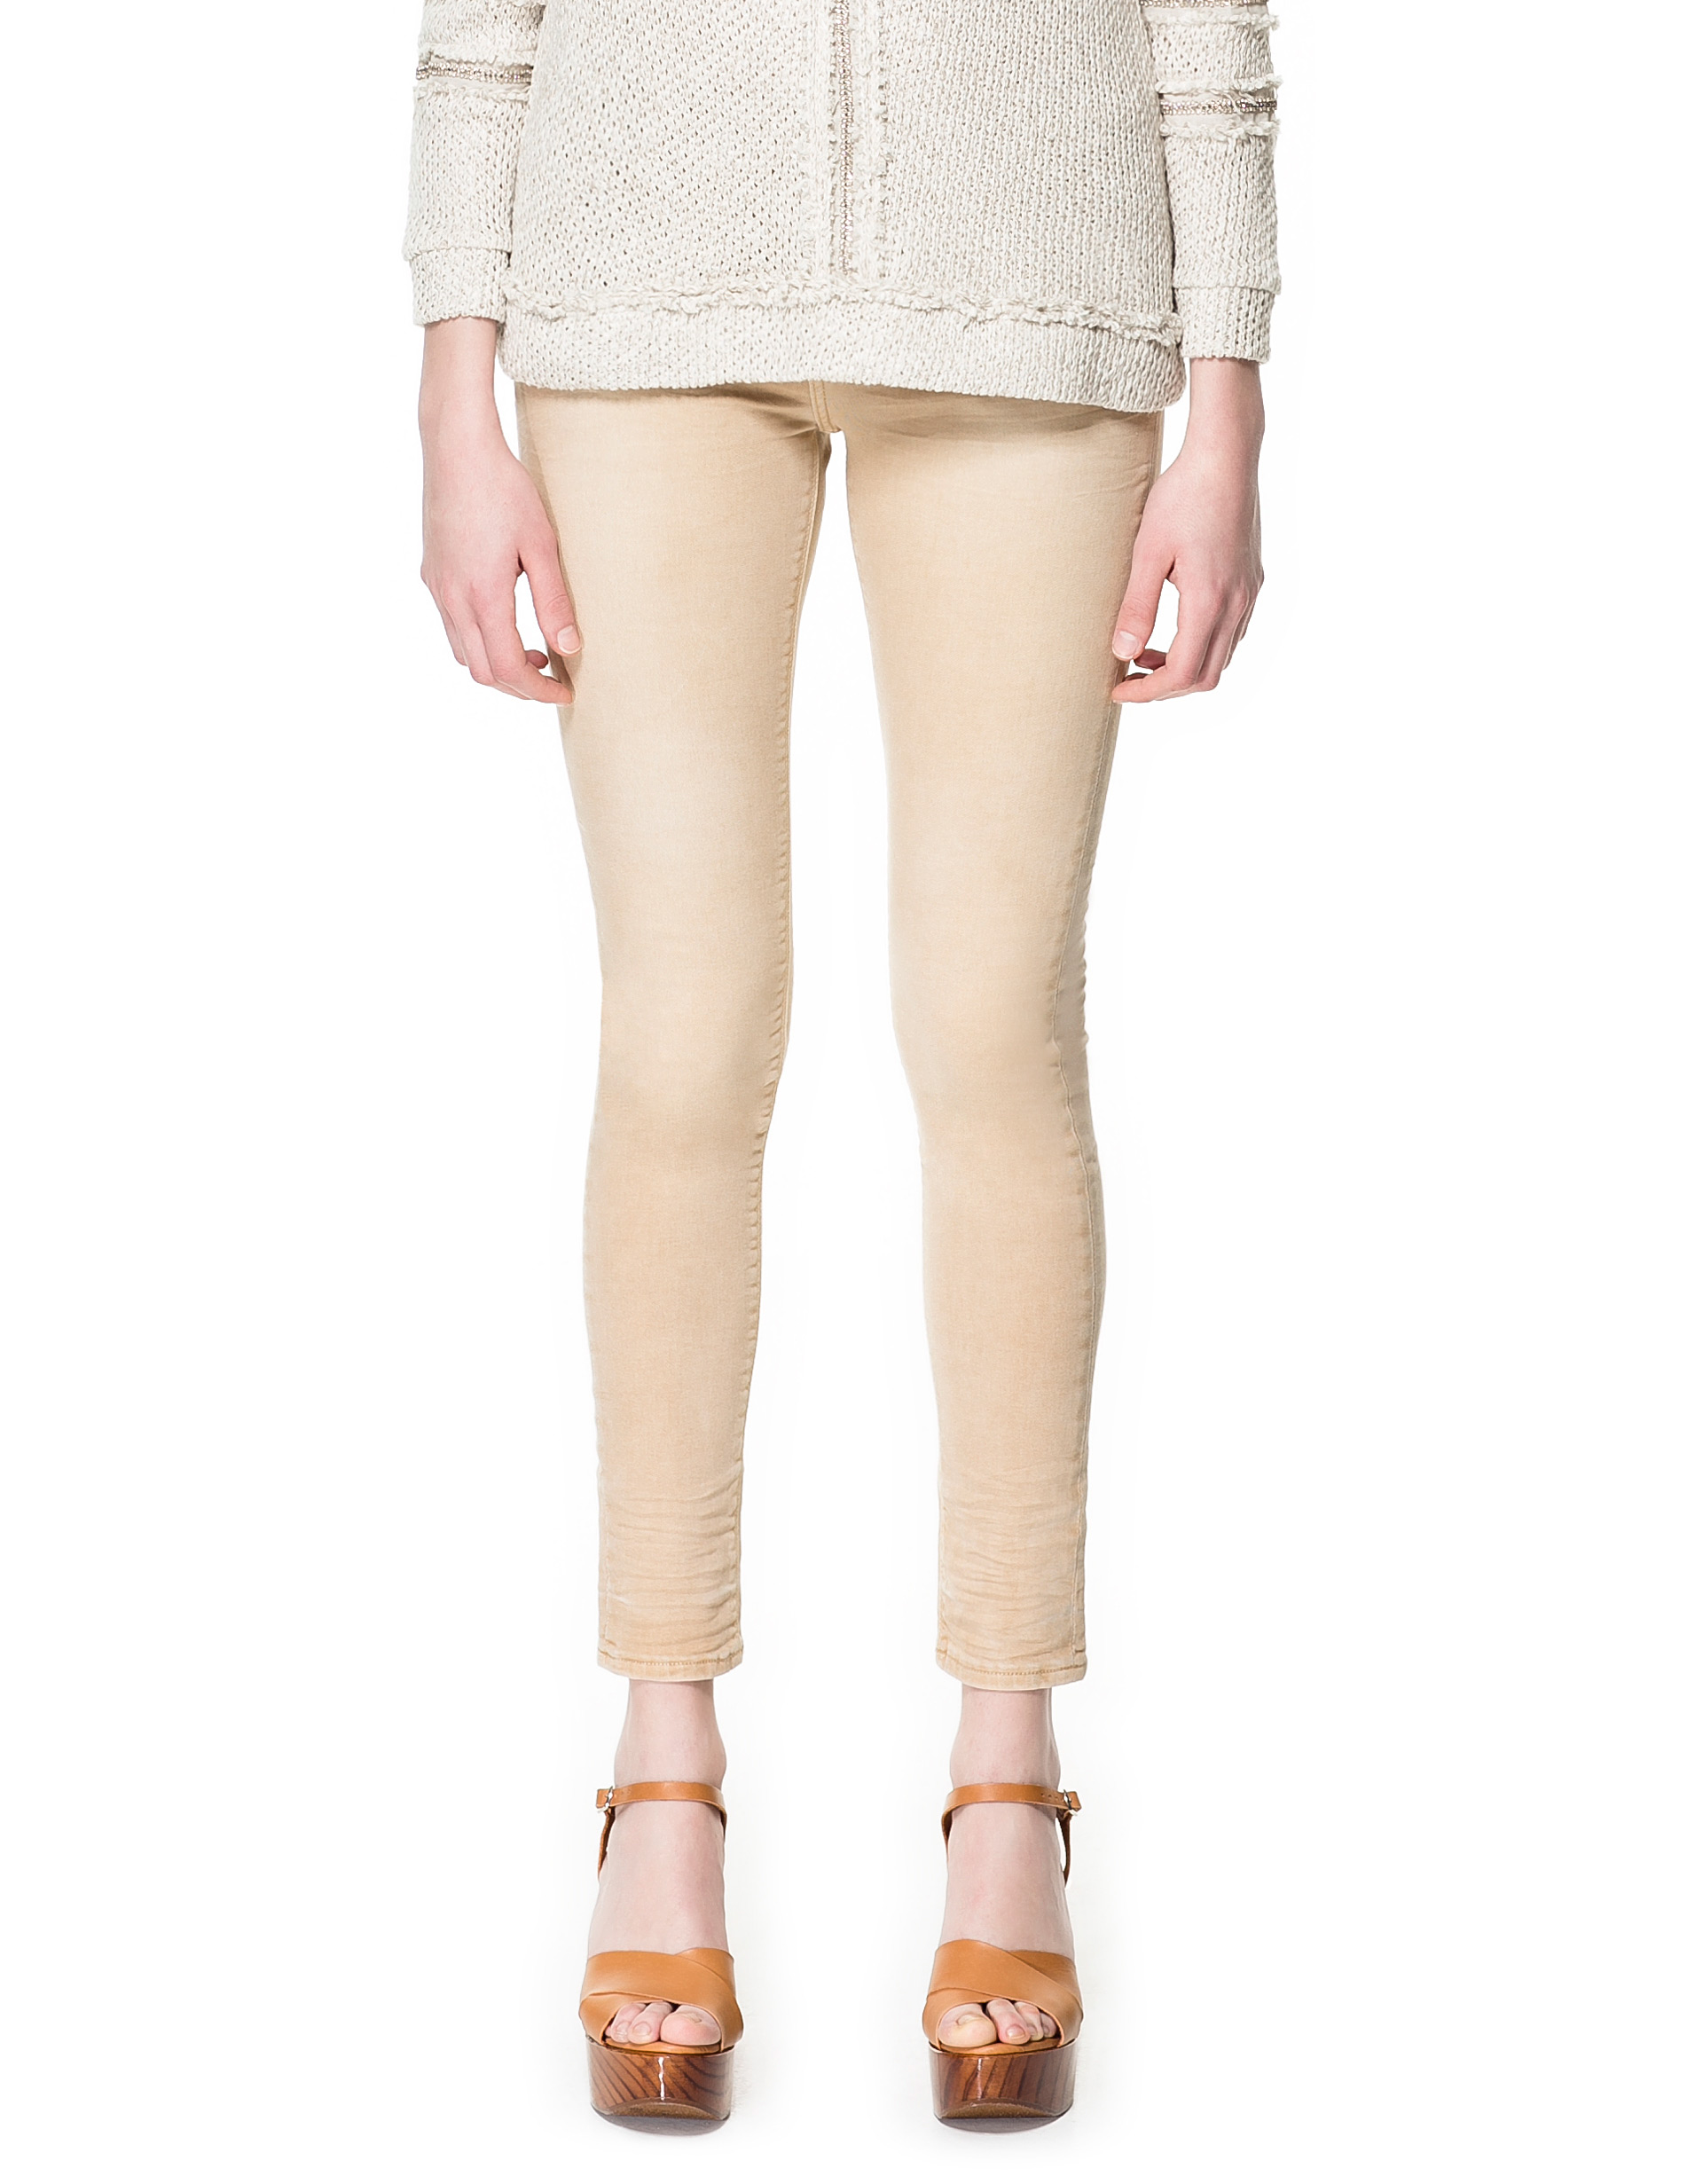 Zara Cream Colored Jeans Product 1 6262429 231379958 